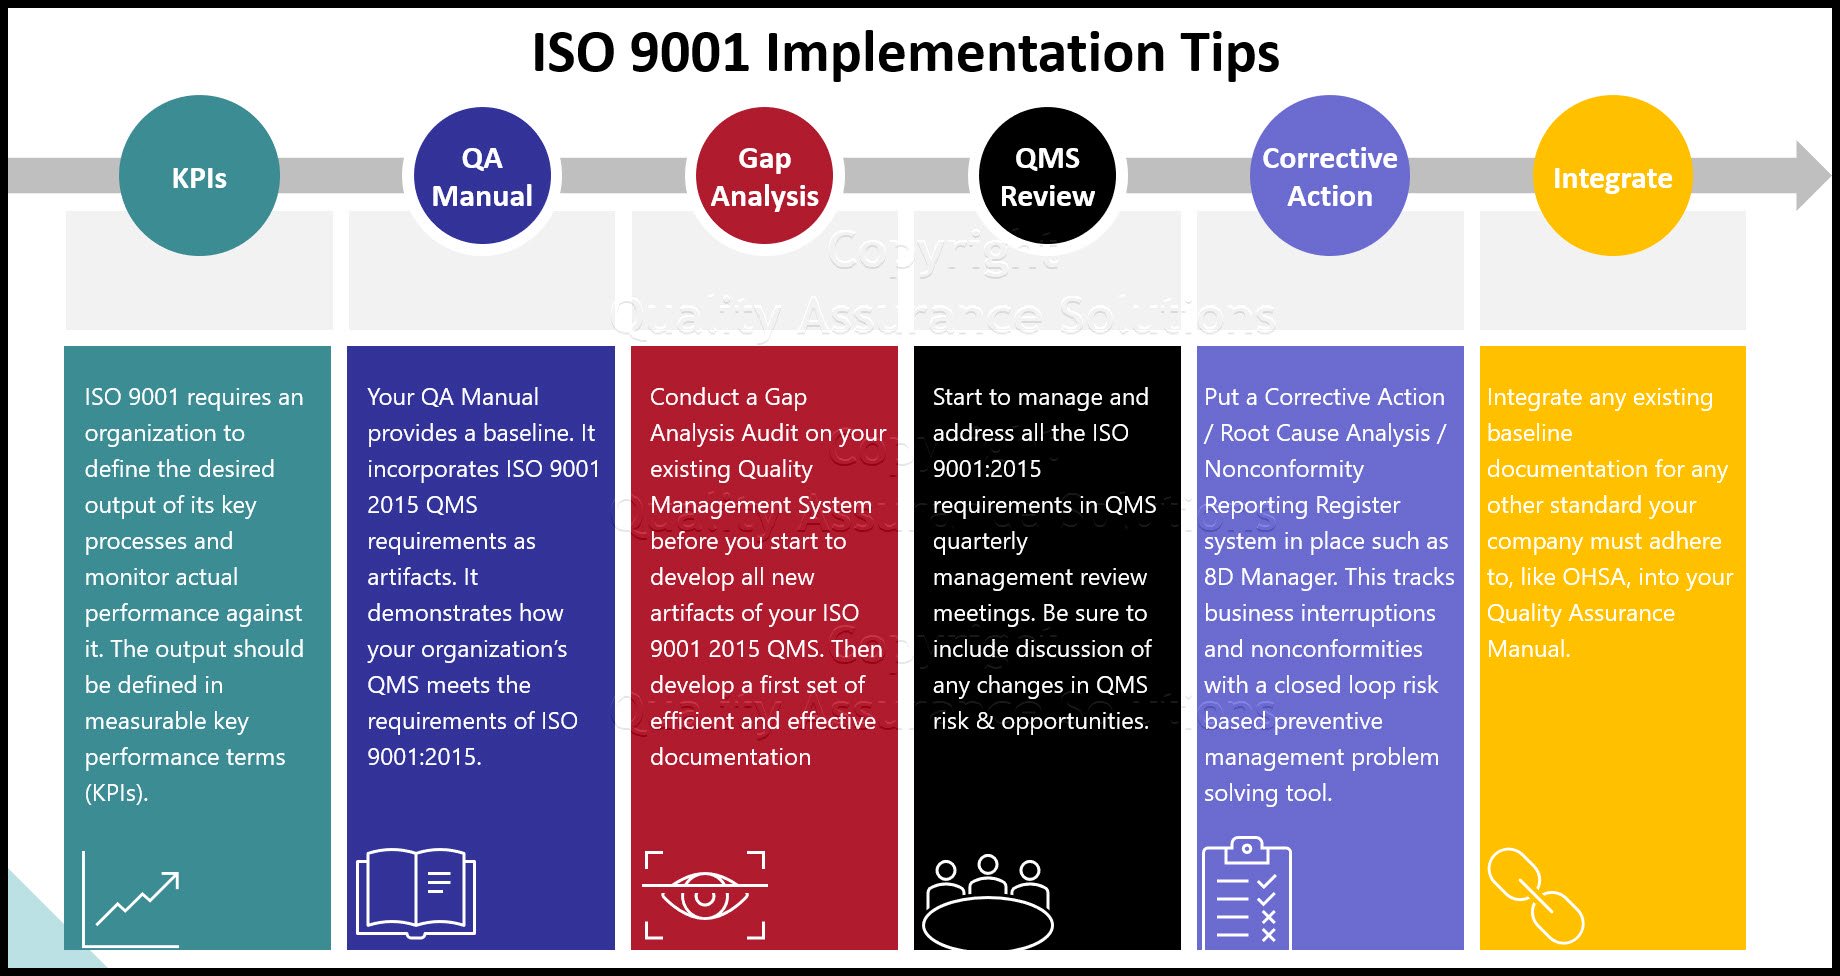 Using ISO 9001 Logo rules